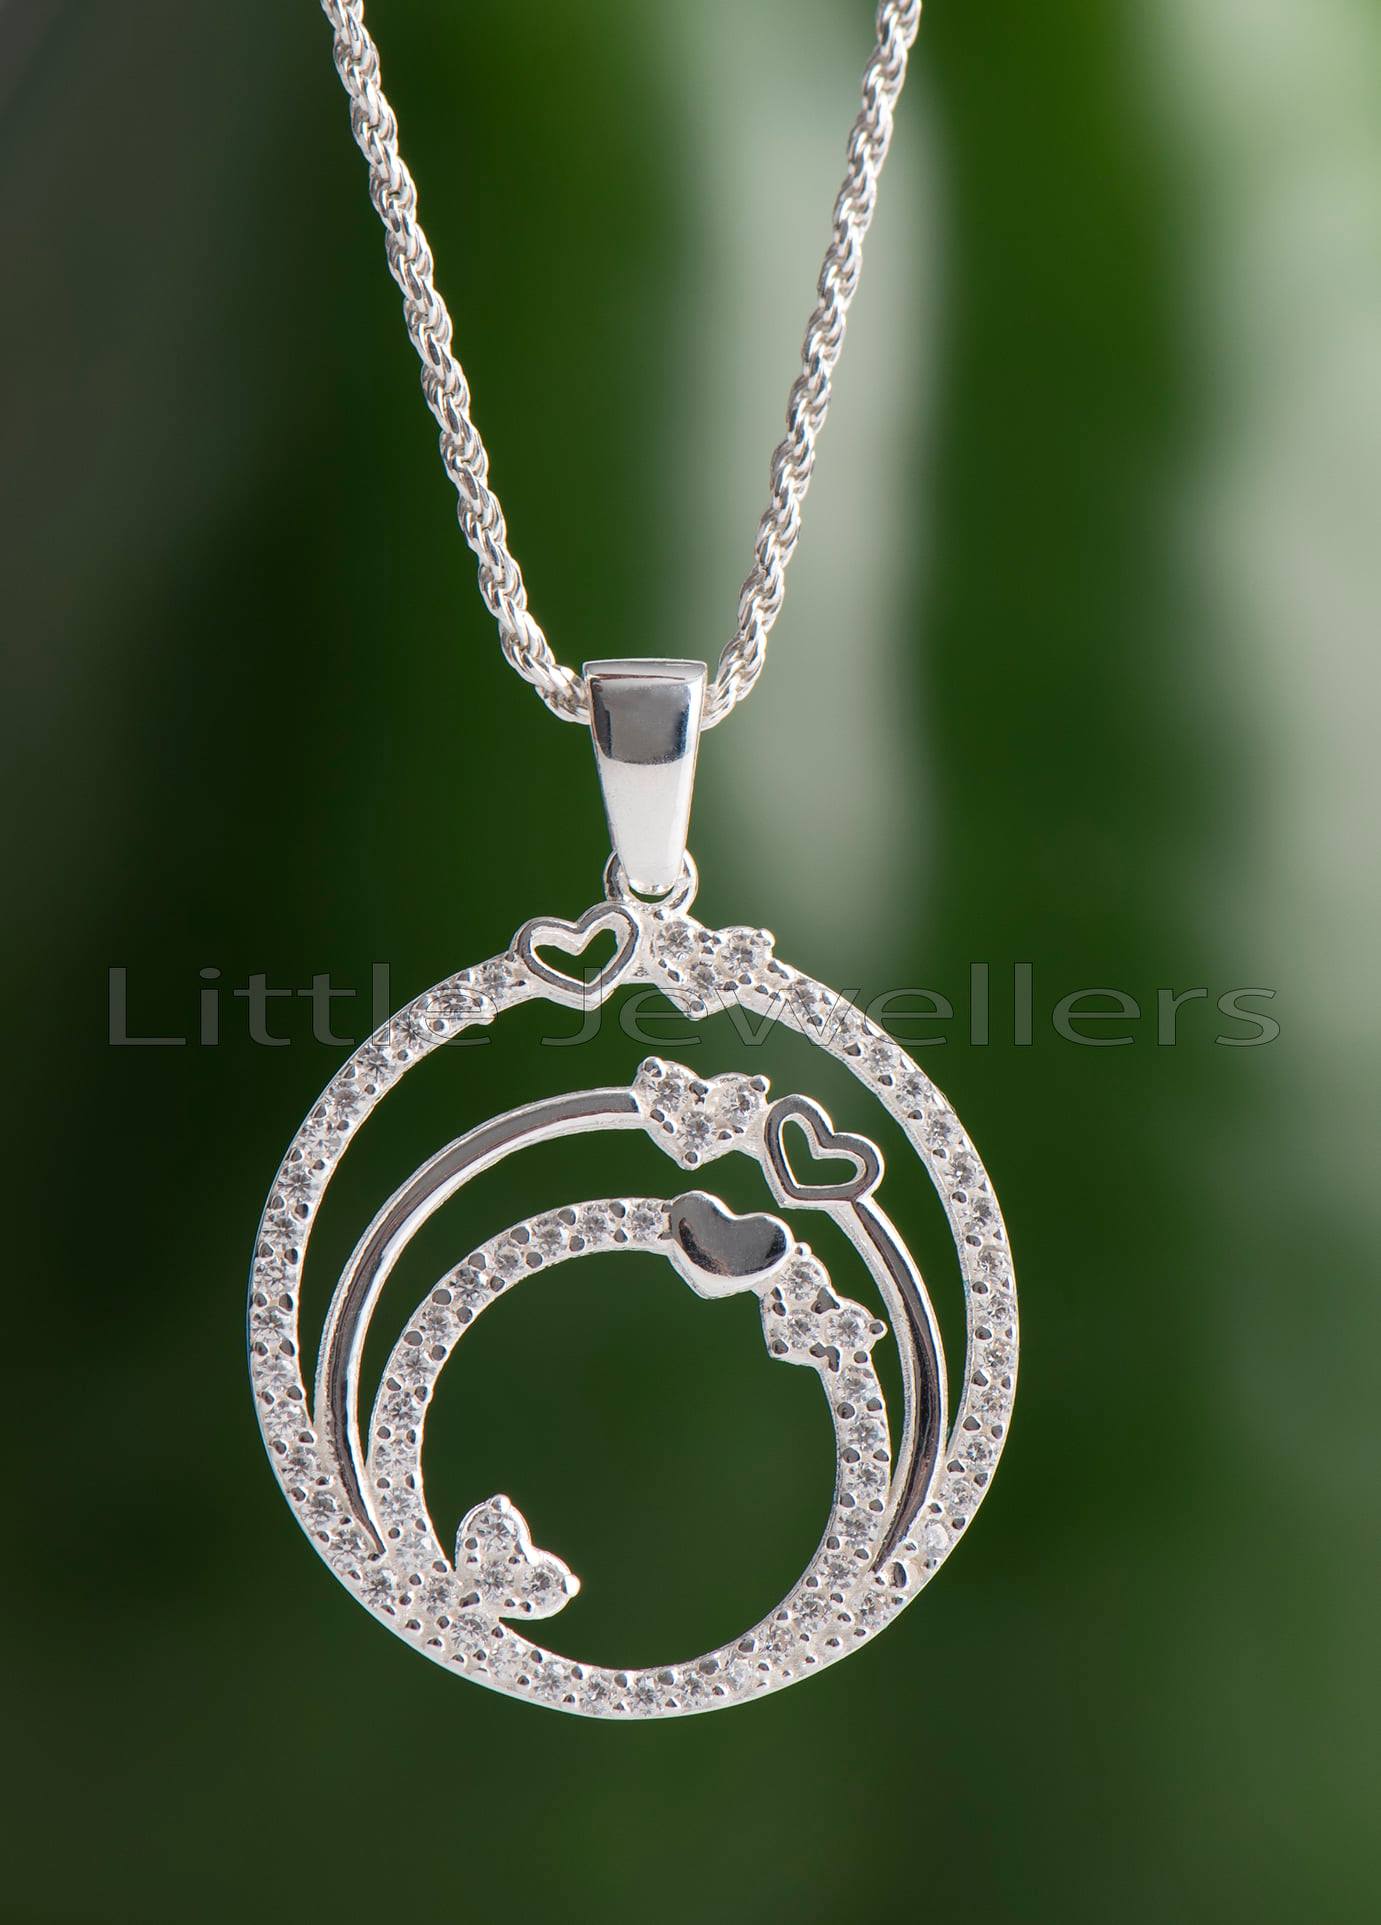 tripple cirtle silver pendant